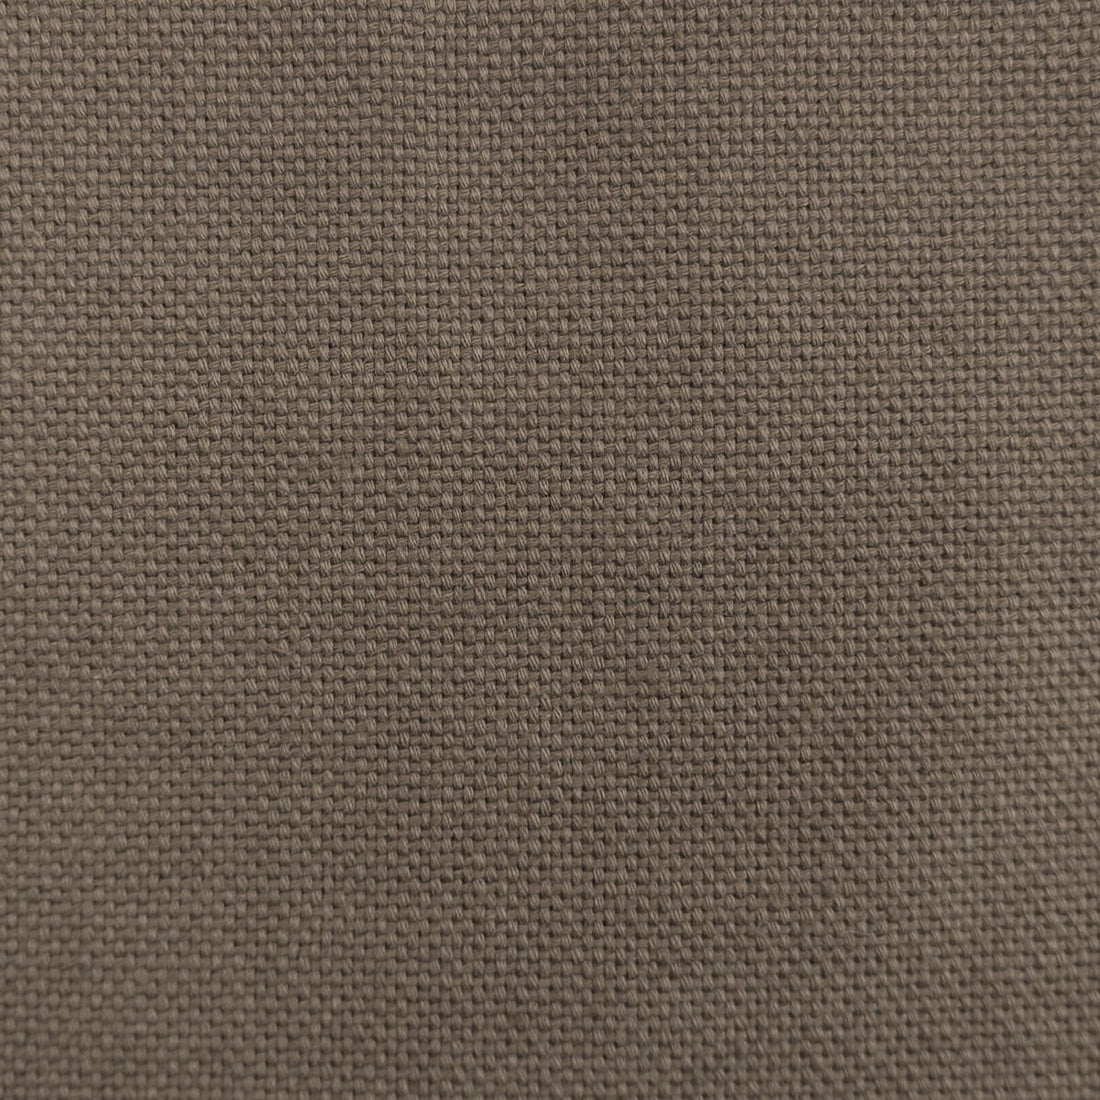 Dobra fabric in marron color - pattern LCT1075.006.0 - by Gaston y Daniela in the Lorenzo Castillo VII The Rectory collection